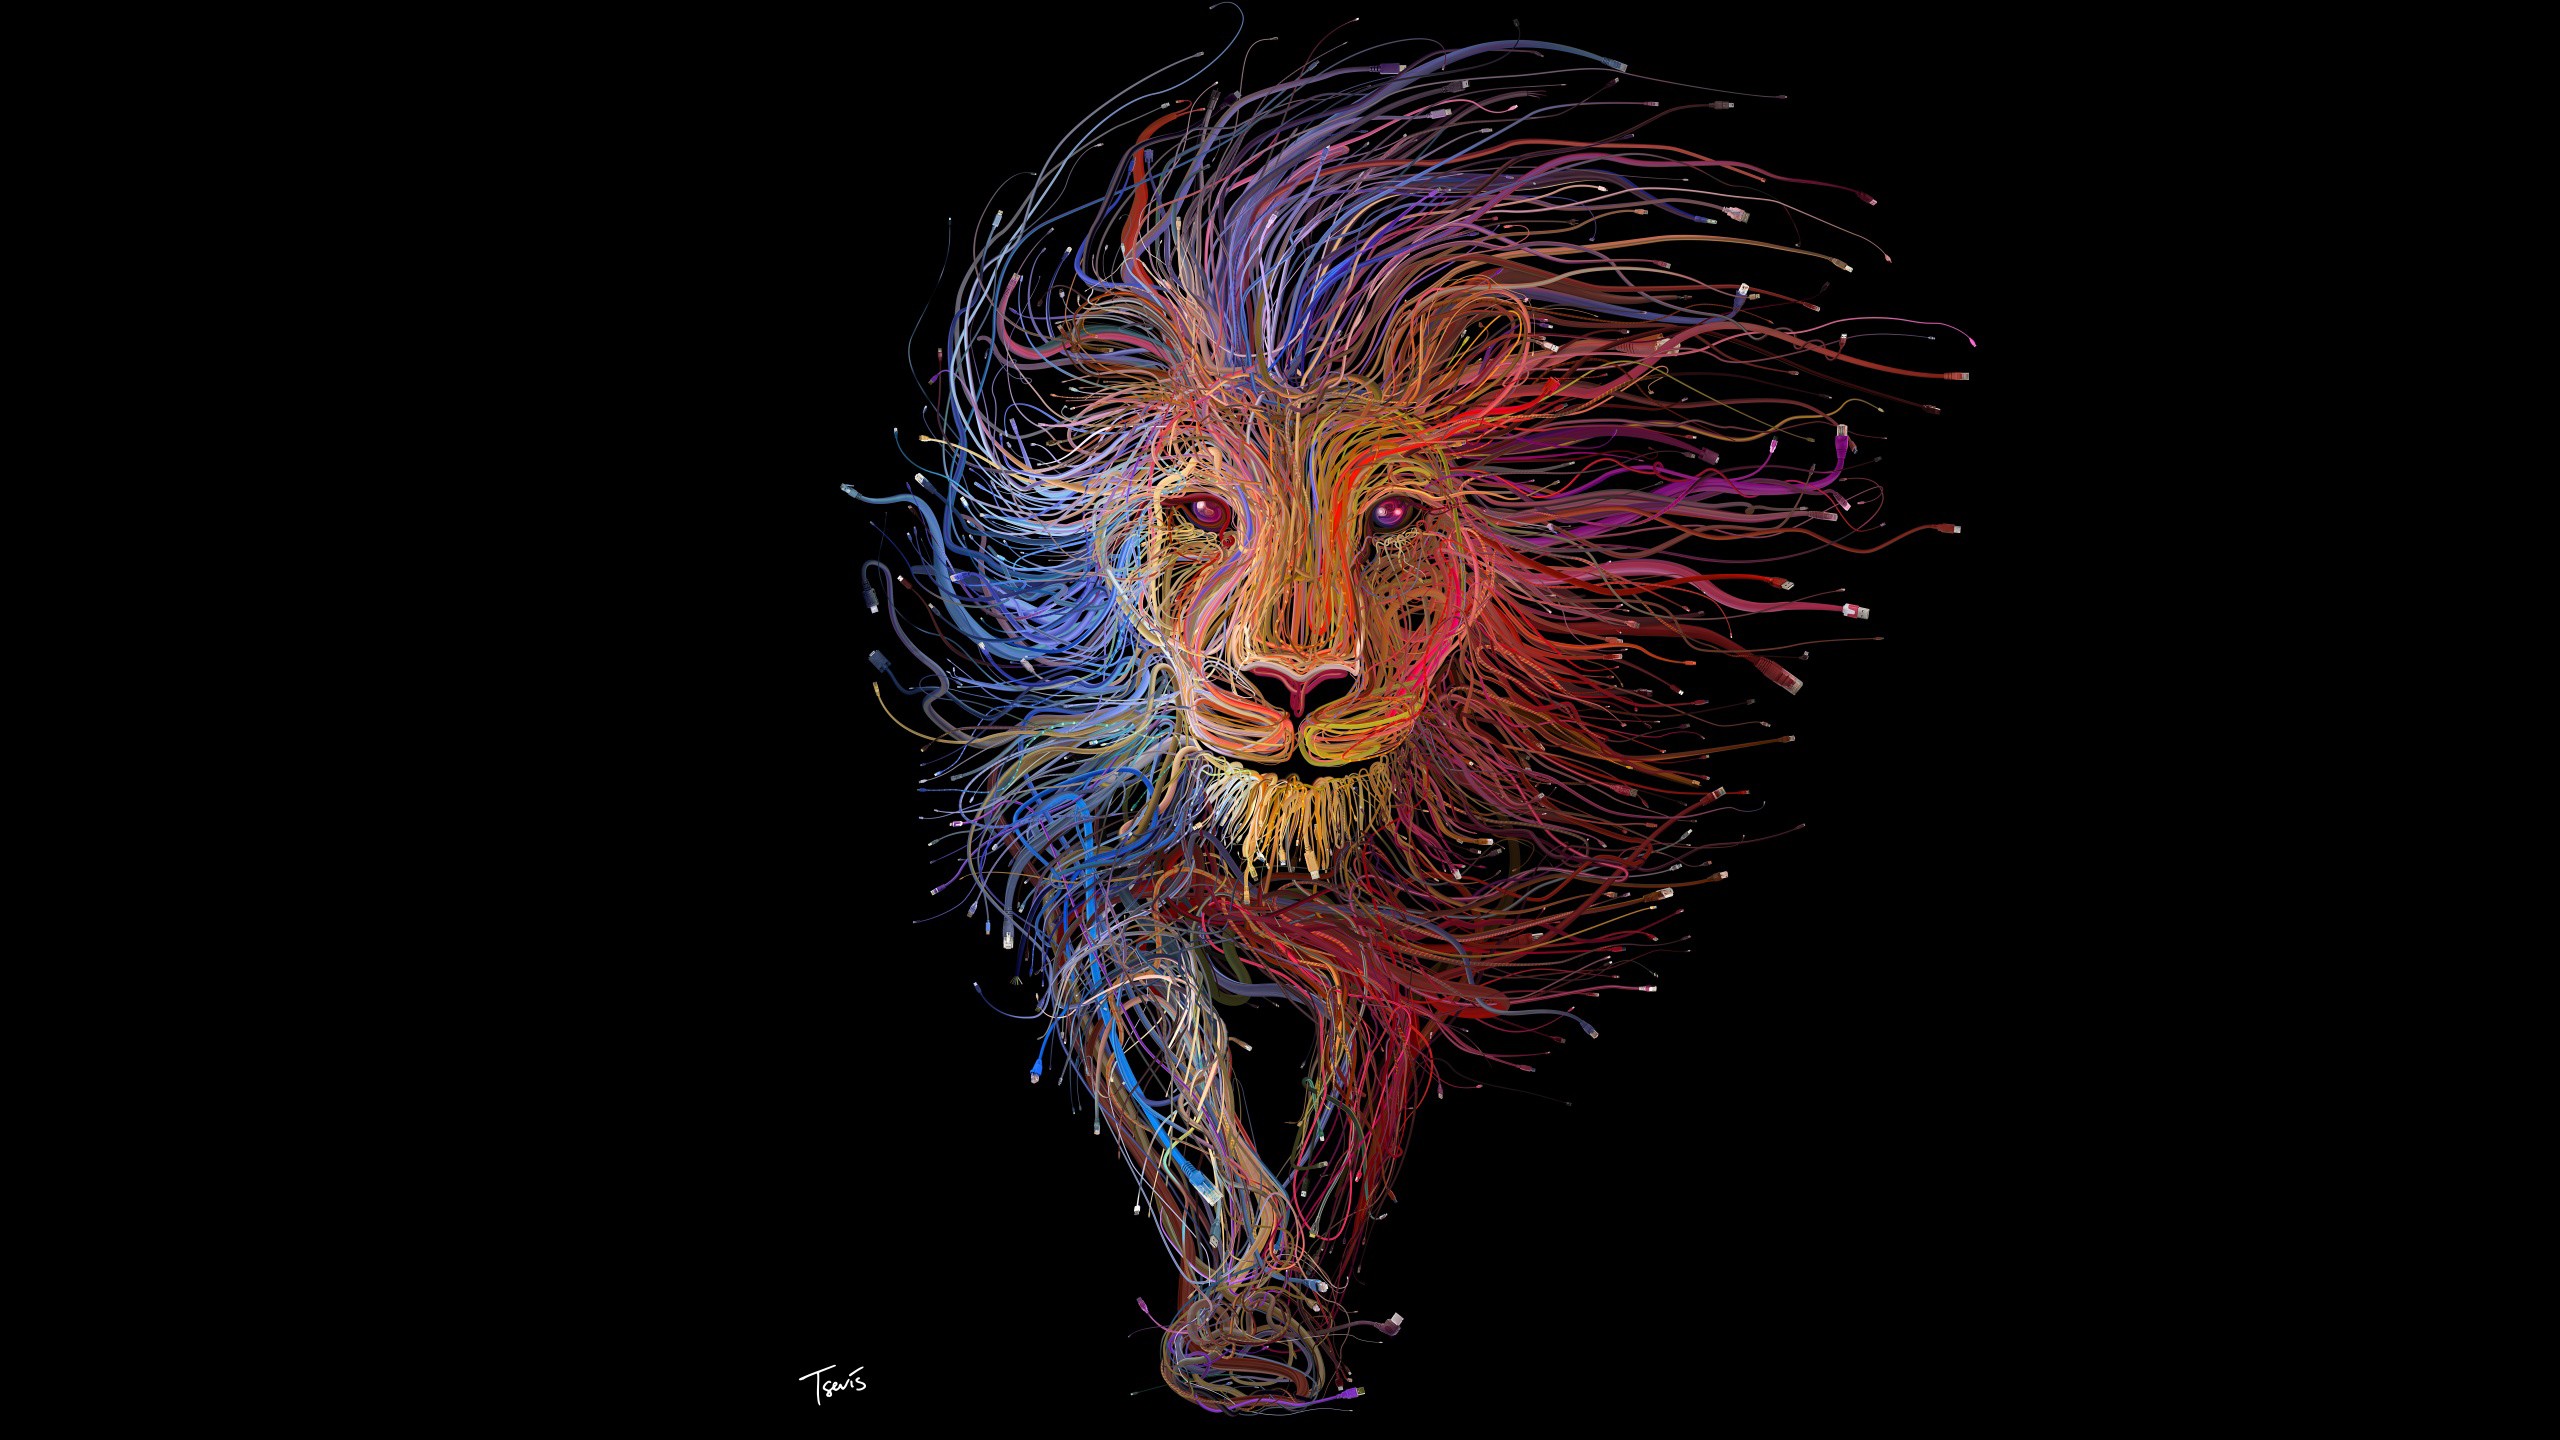 General 2560x1440 colorful digital art animals ethernet wires minimalism